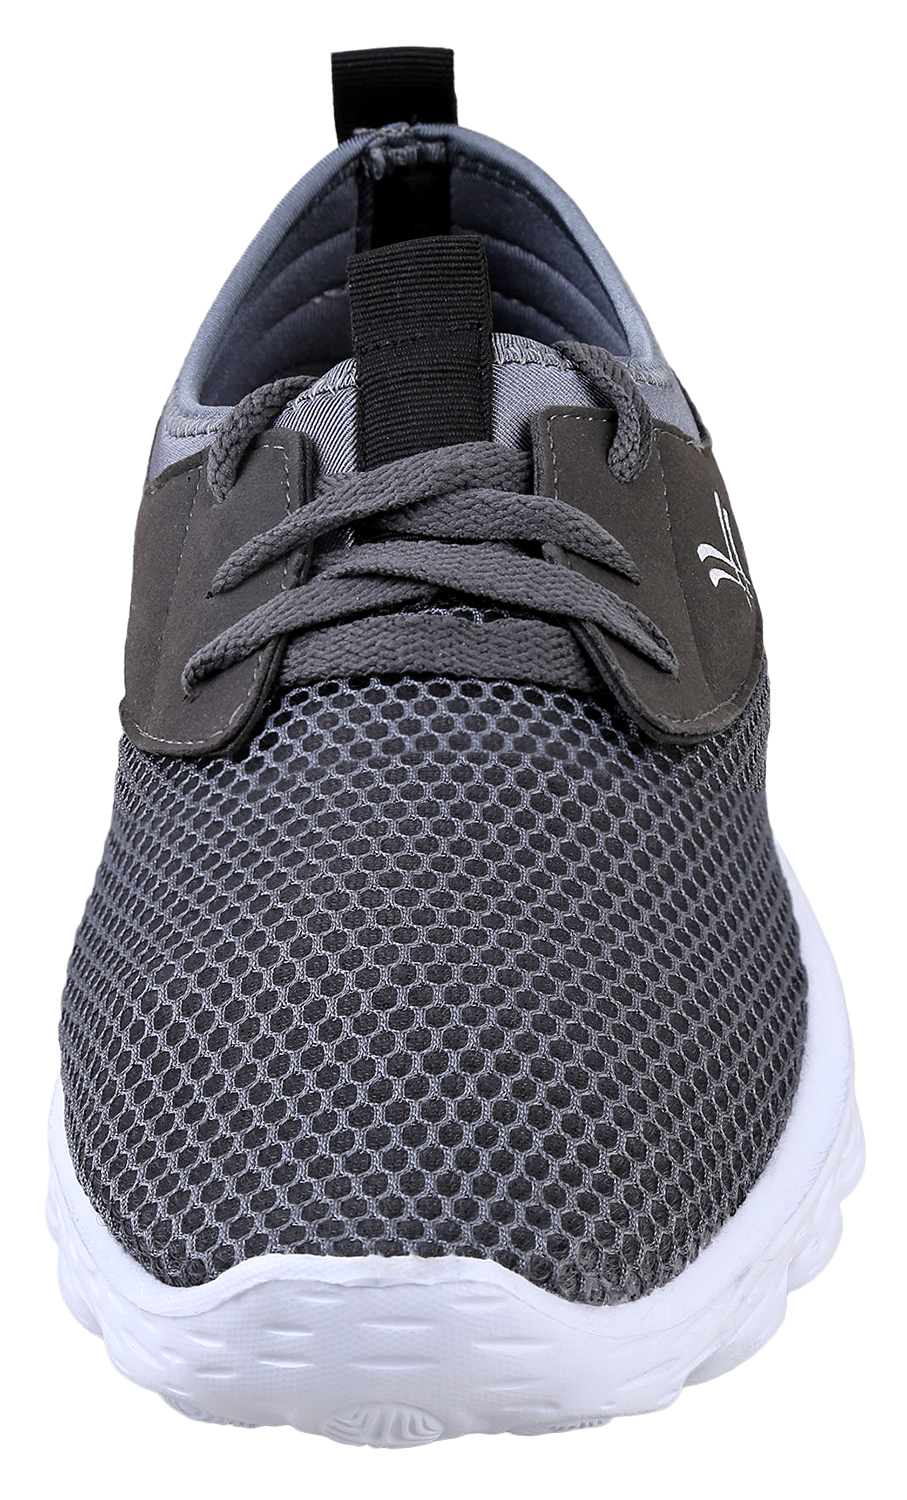 Urban Fox Men's Breeze Lightweight Shoes | Lightweight Shoes for Men | Casual Shoes | Walking Shoes for Men | Grey/White 8 M US - image 3 of 7